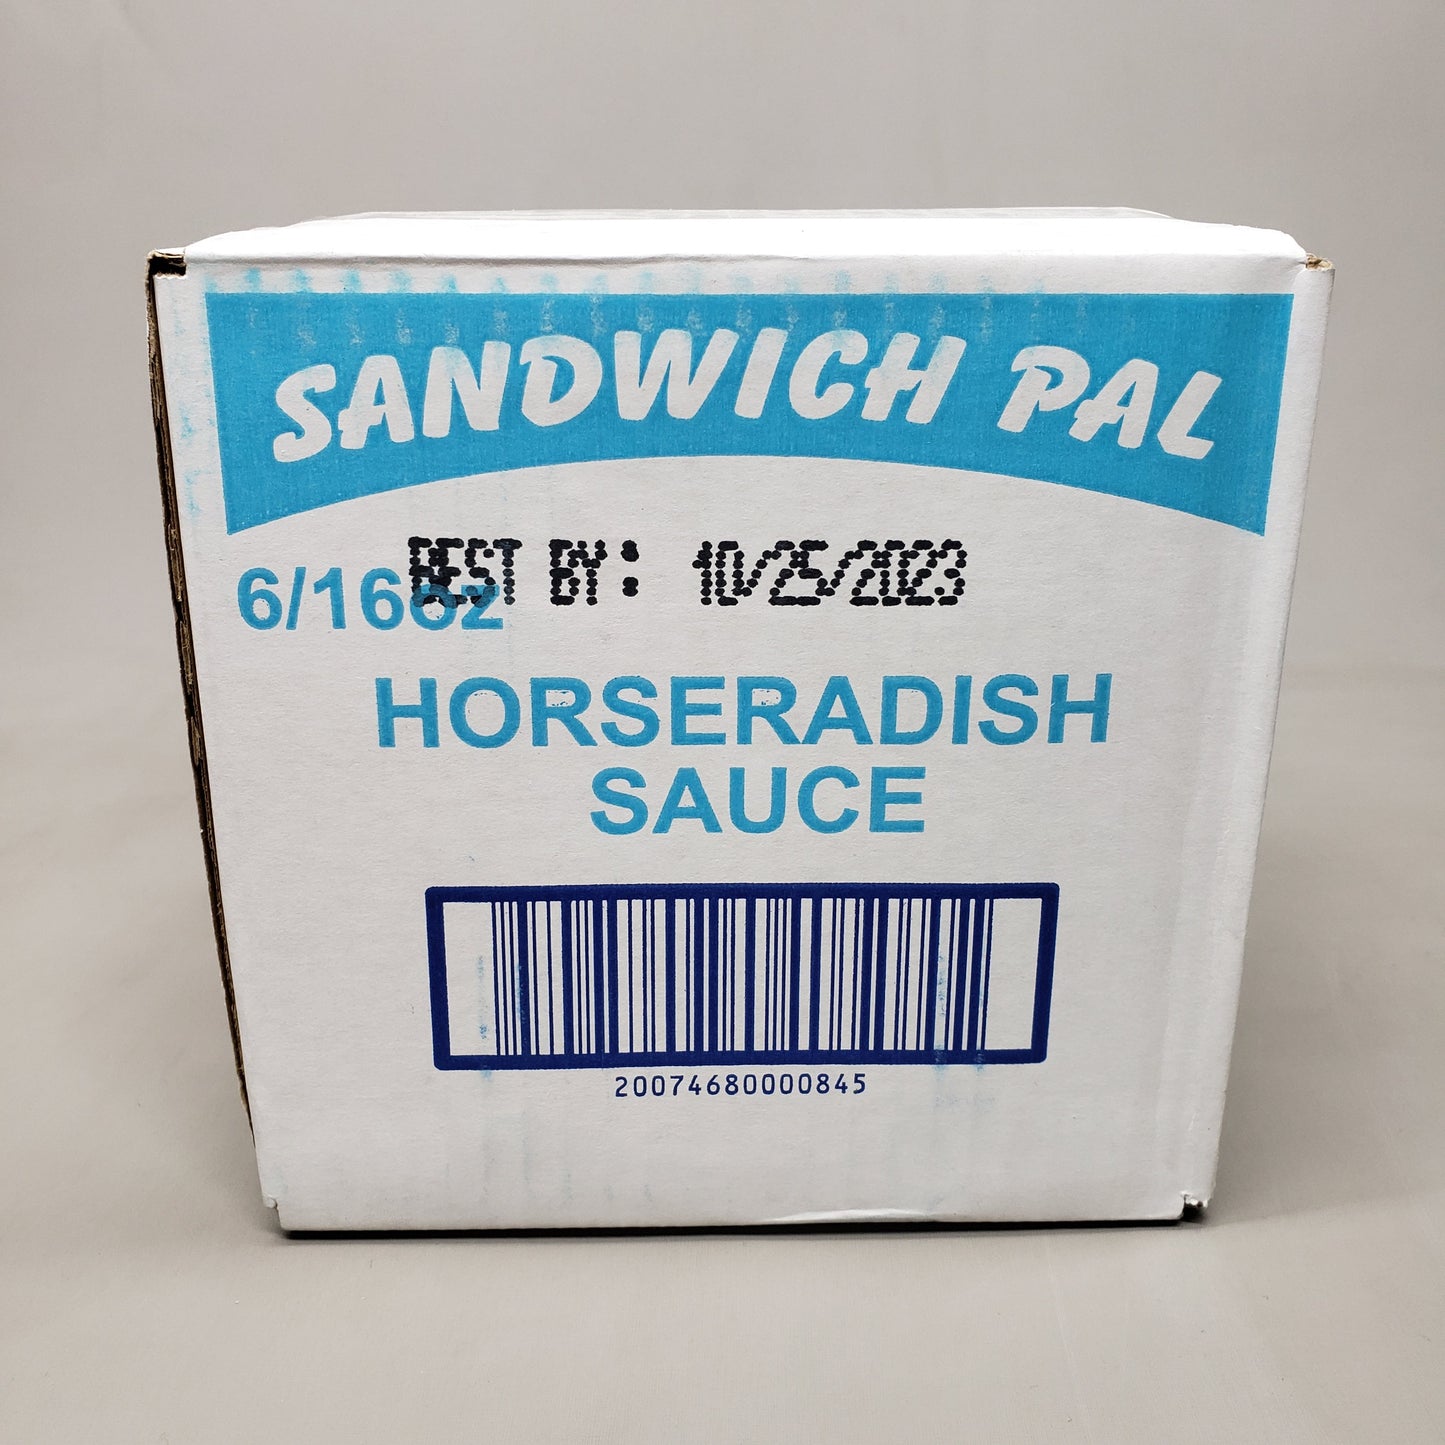 ZA@ WOEBER'S (24 PACK) Sandwich Pal Horseradish Sauce 6/16 oz 10/23 K